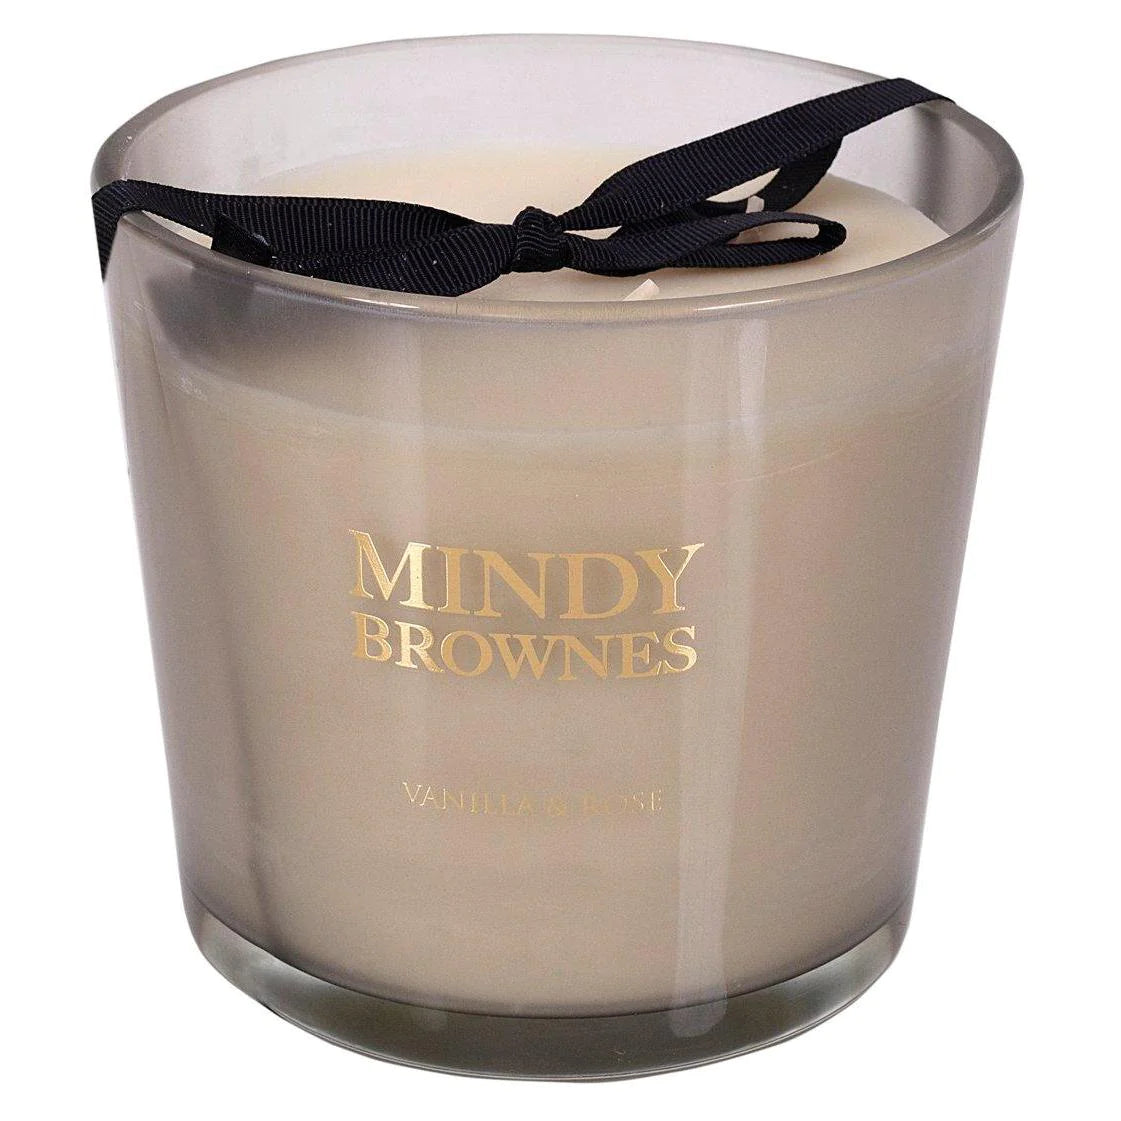 Mindy Brownes Medium Scented Candle - Vanilla & Rose